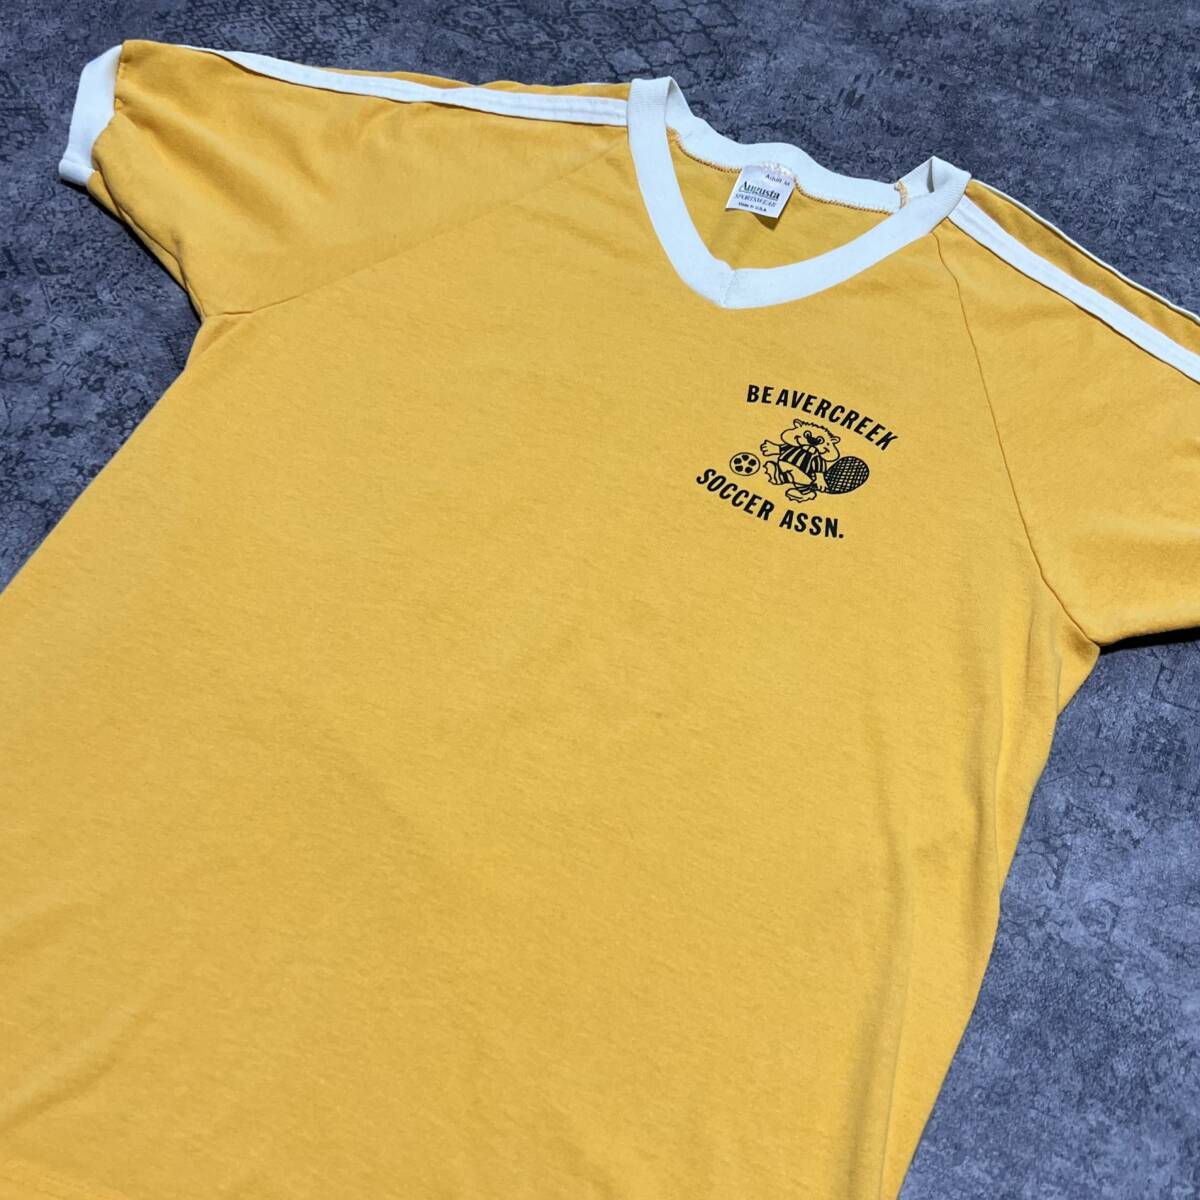 USA製 90s Augusta ゲームシャツ Tシャツ ユニフォーム イエロー 90年代 ヴィンテージ ビンテージ vintage_画像4